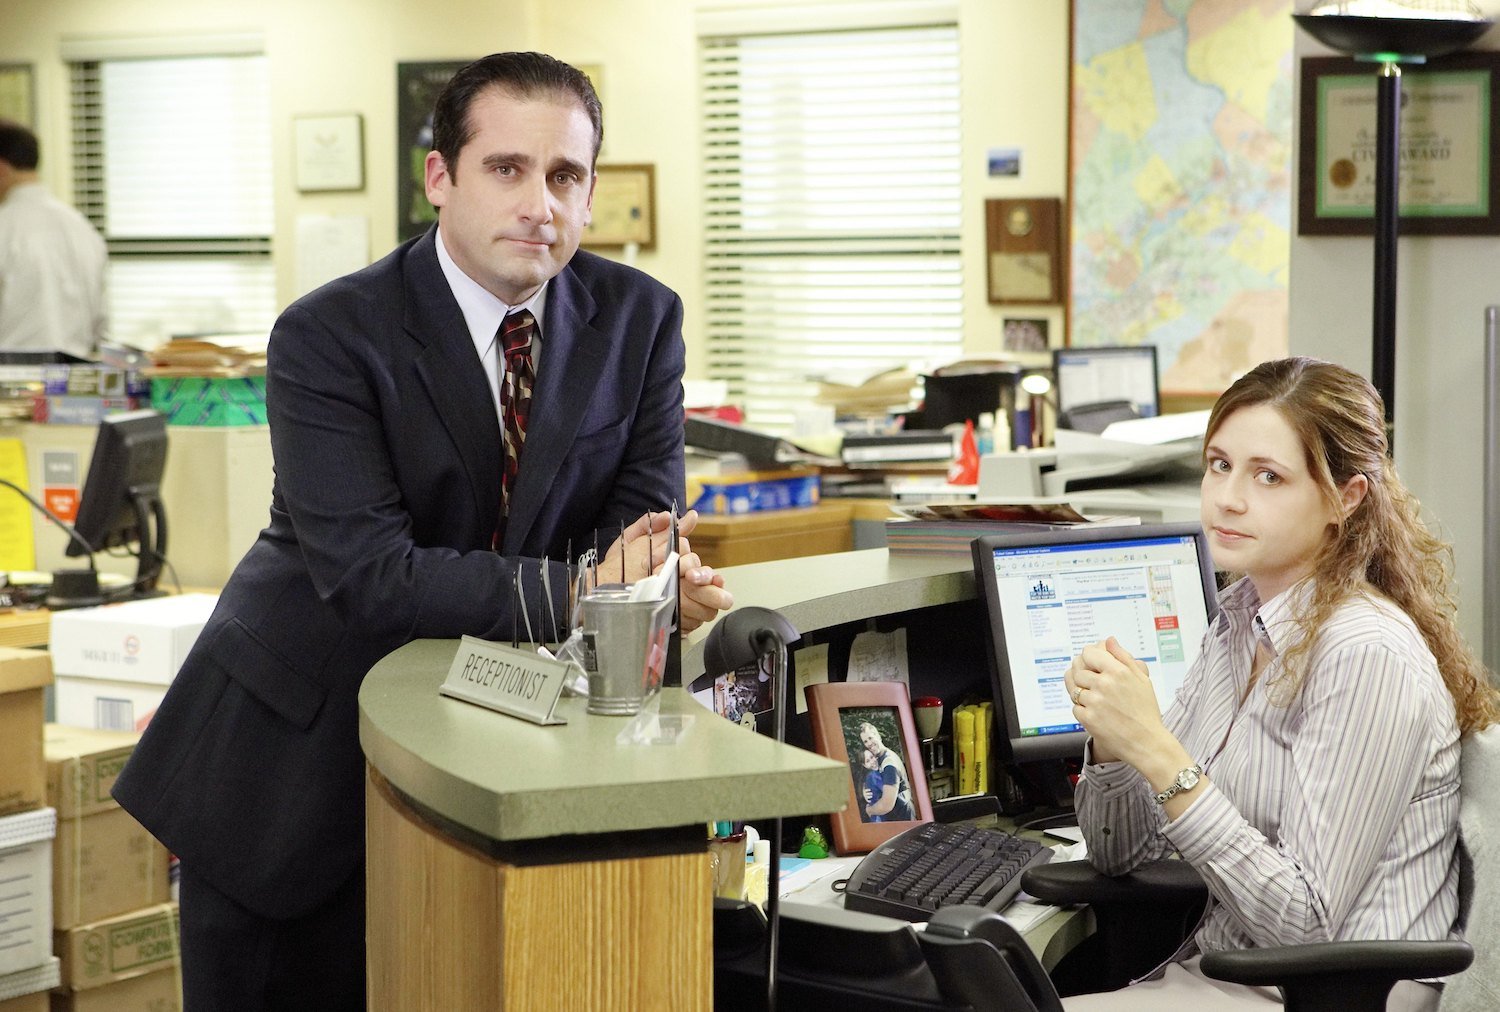 The Office stars Steve Carell as Michael Scott and Jenna Fischer as Pam Beesly 